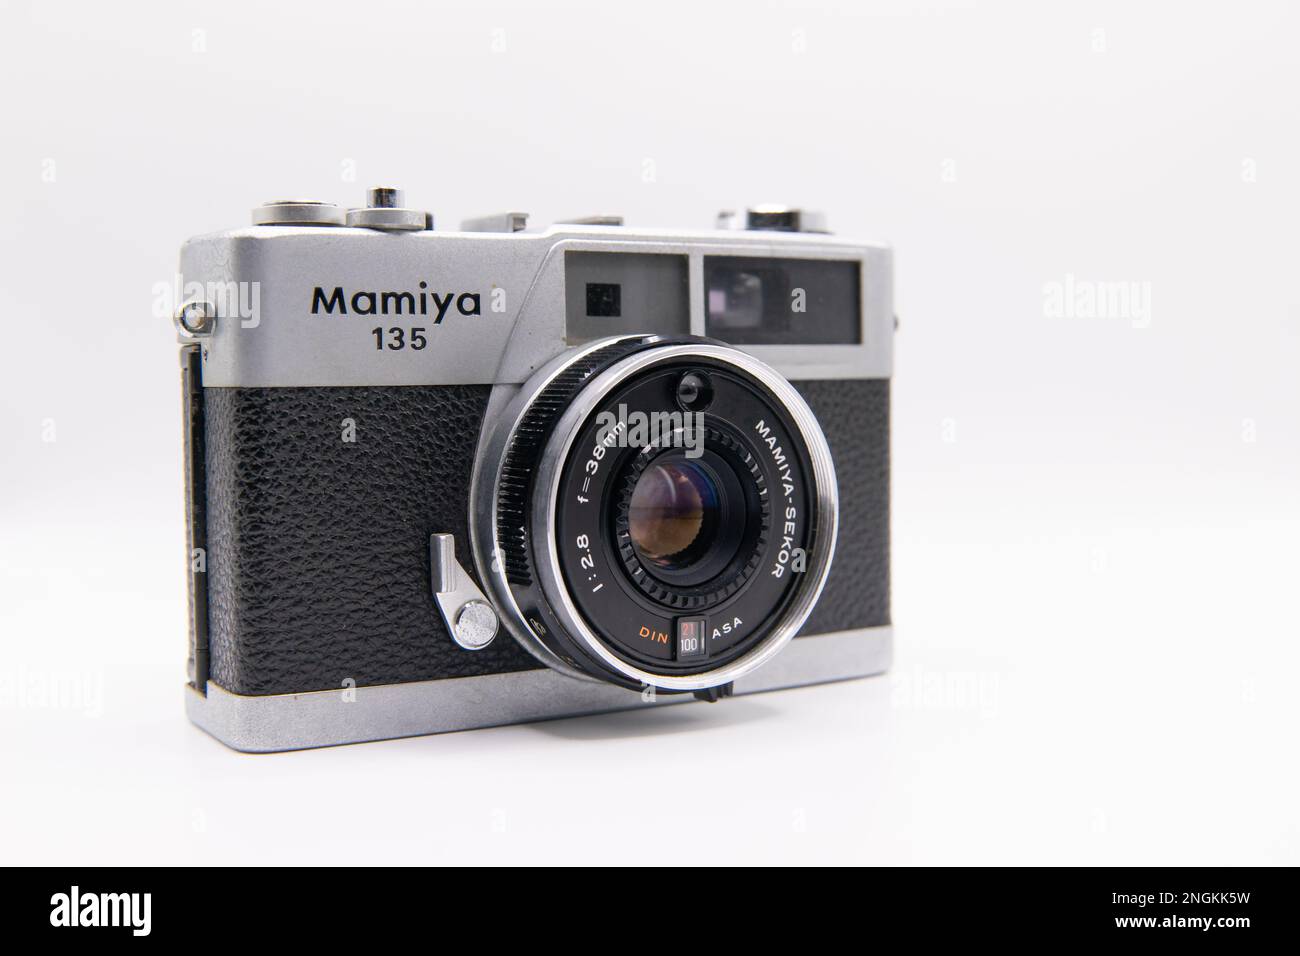 Closeup shot of Mamiya 135 EE rangefinder camera with Mamiya Sekkor 38mm lens on white background Stock Photo